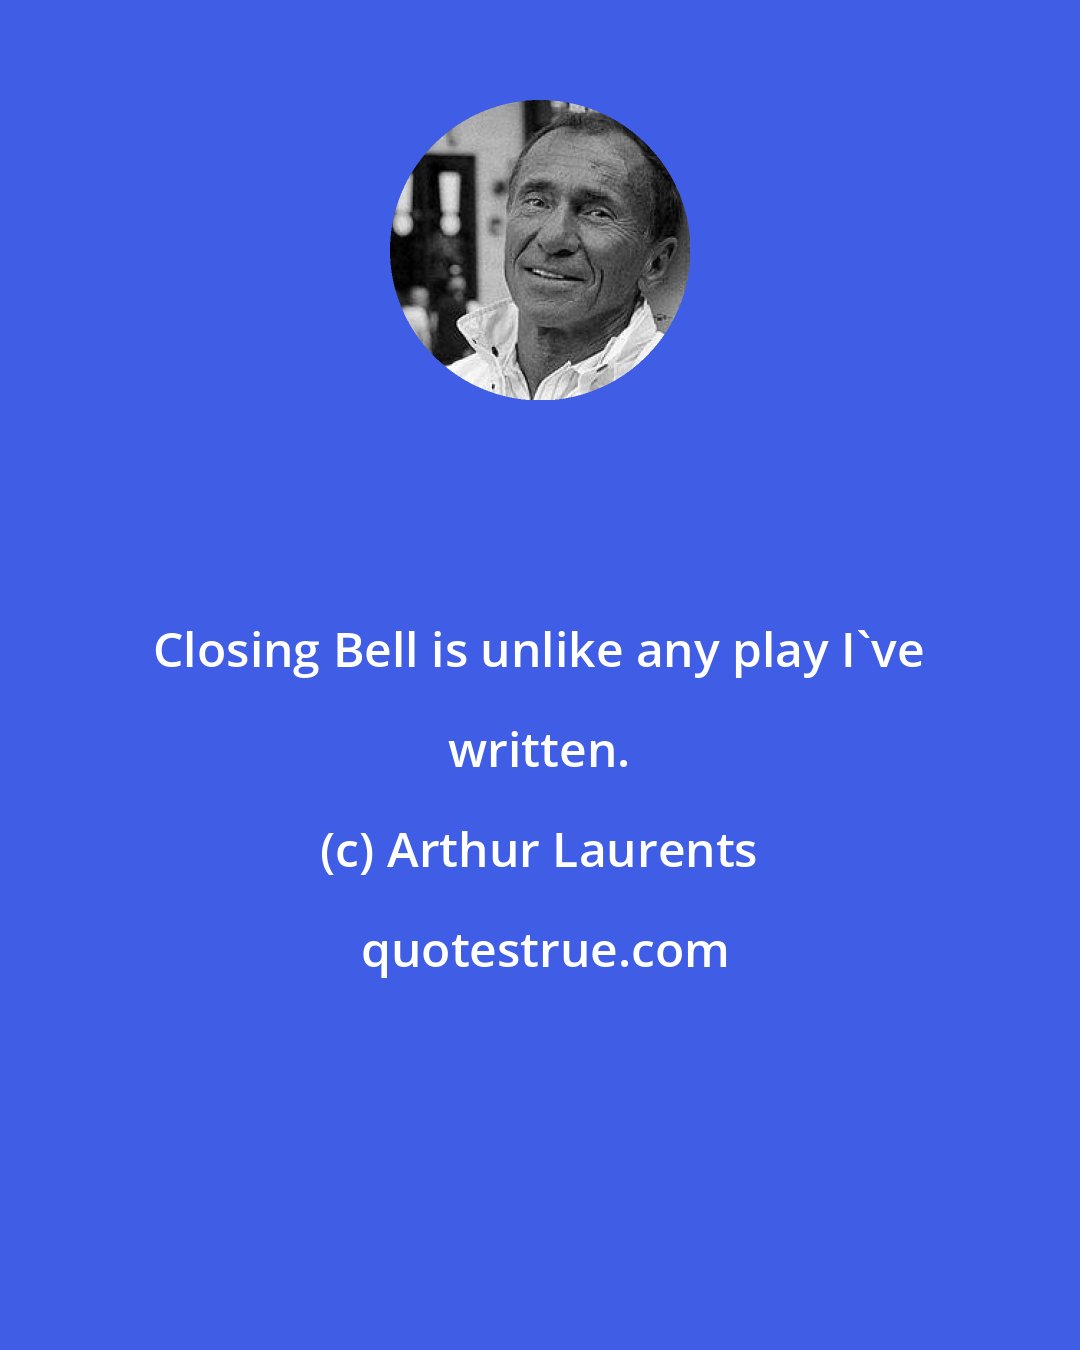 Arthur Laurents: Closing Bell is unlike any play I've written.